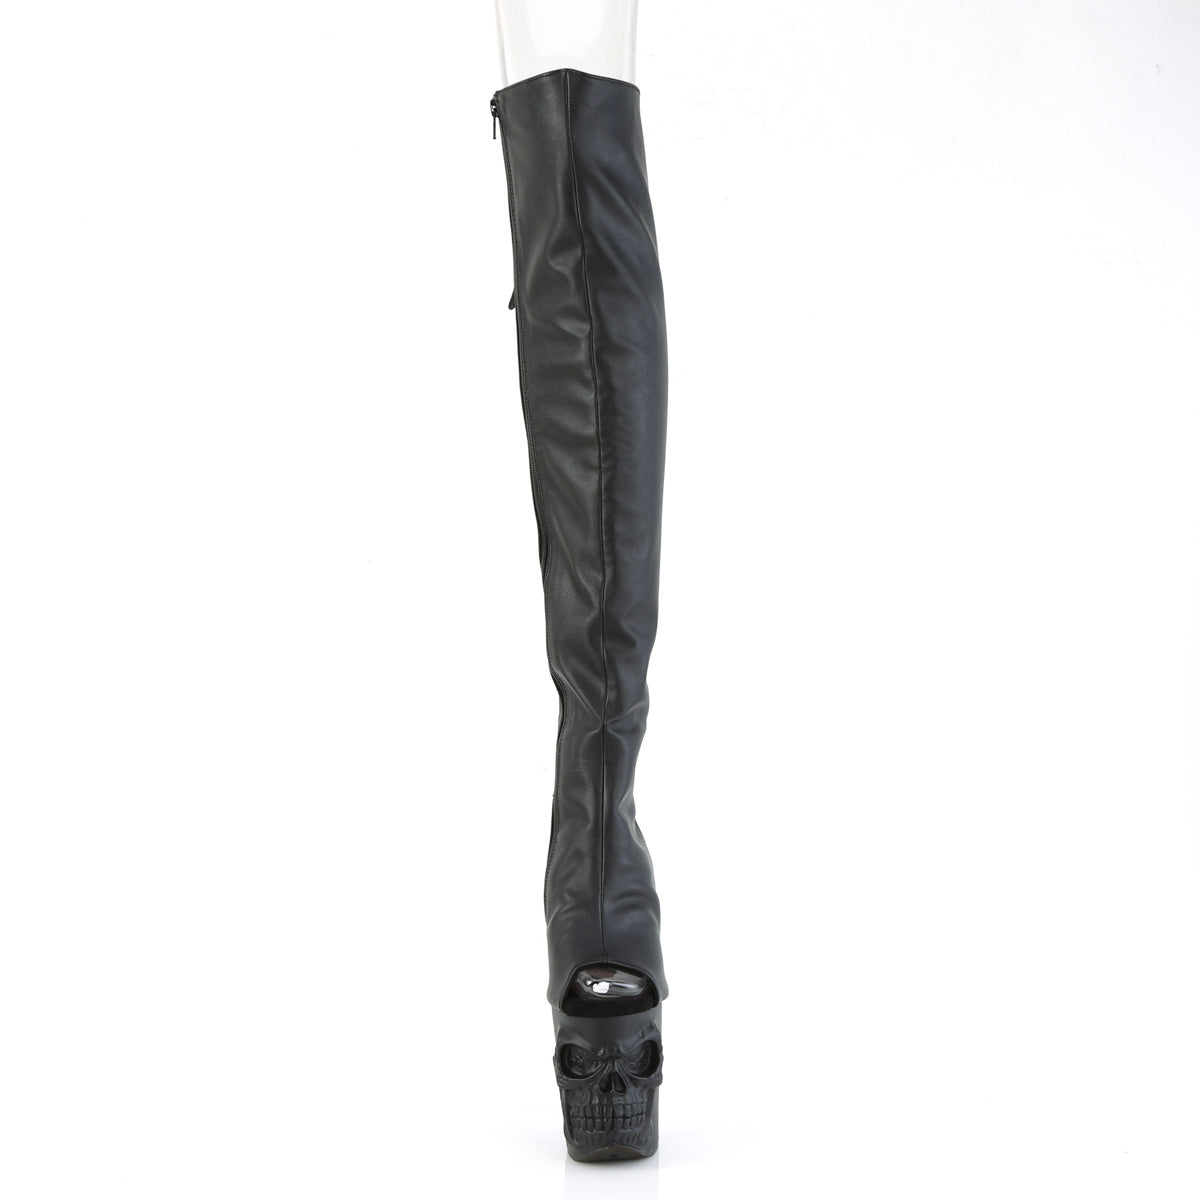 RAPTURE-3019 Pleaser Knee High Boots Black Faux Leather/Black Matte Platforms (Exotic Dancing)